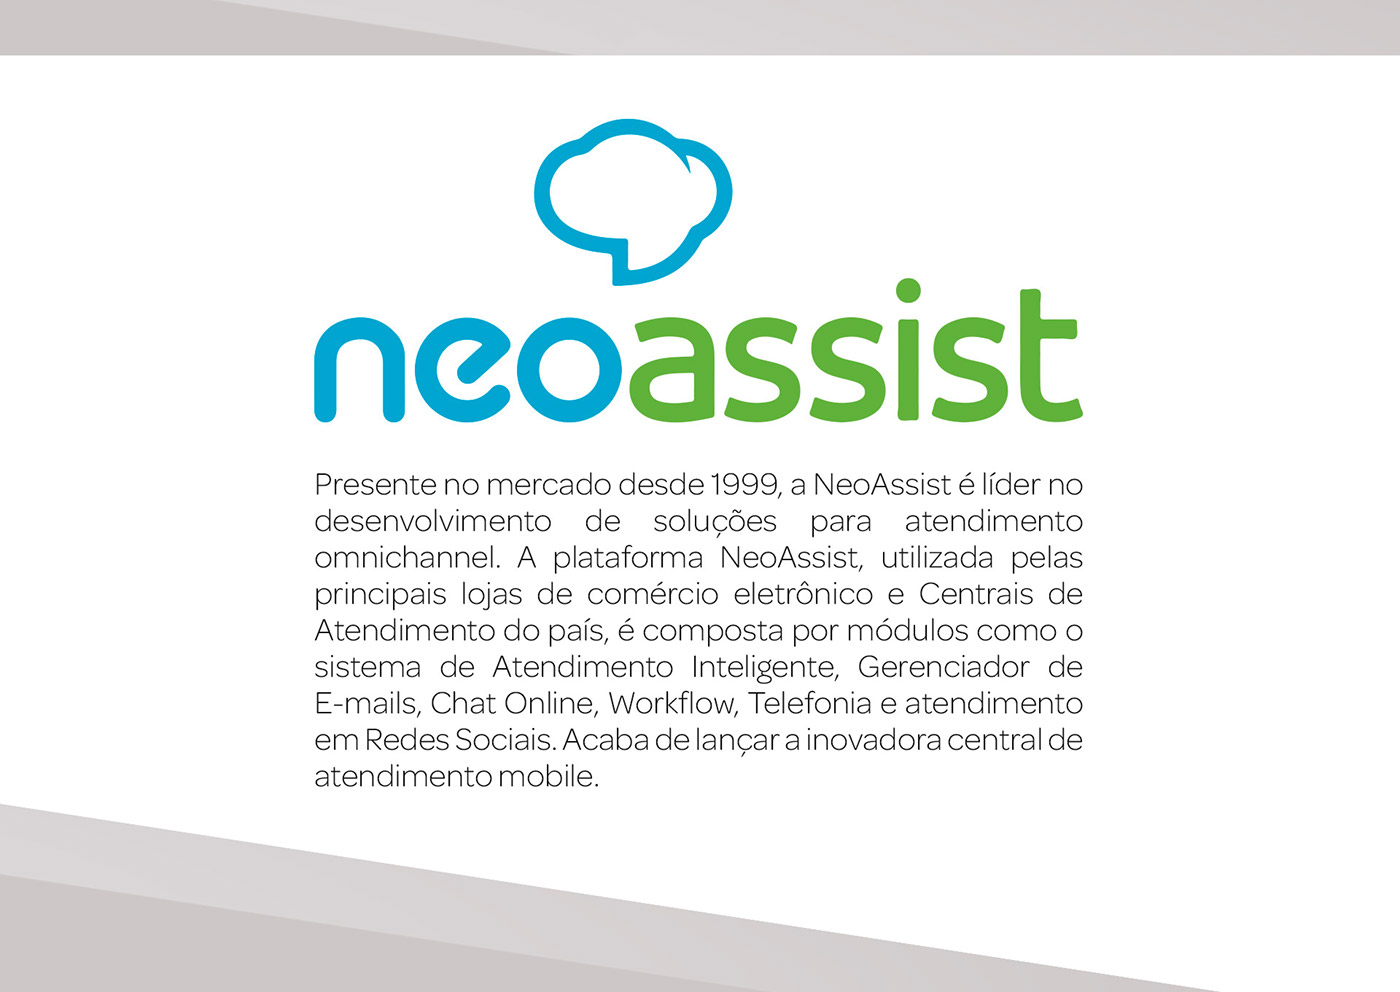 Neoassist nexus omnichannel Cliente atendimento consumidor plataformas